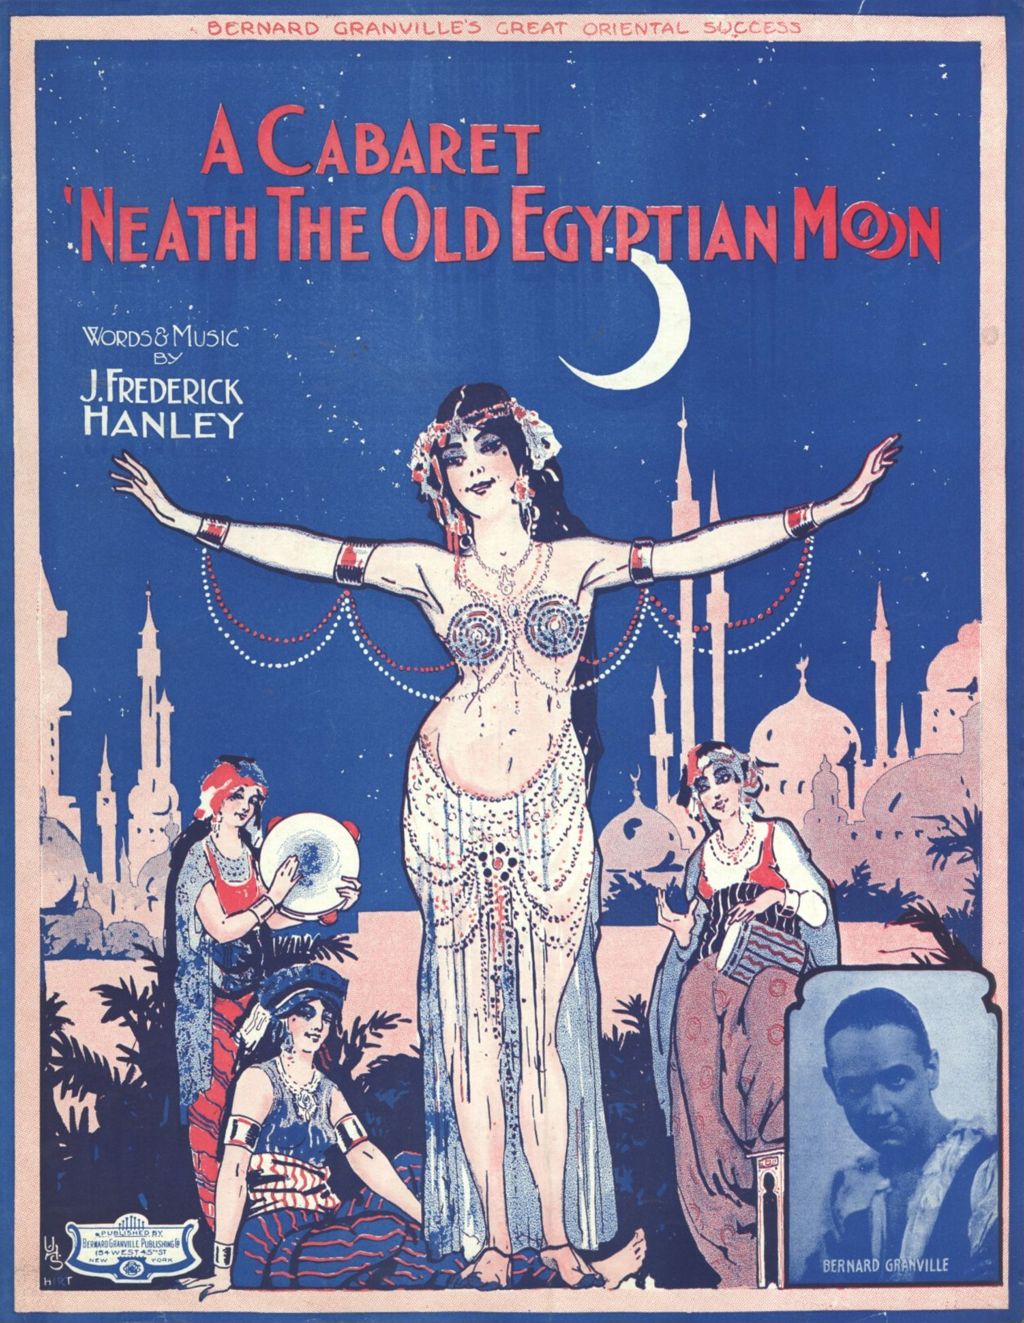 Cabaret 'Neath the Old Egyptian Moon